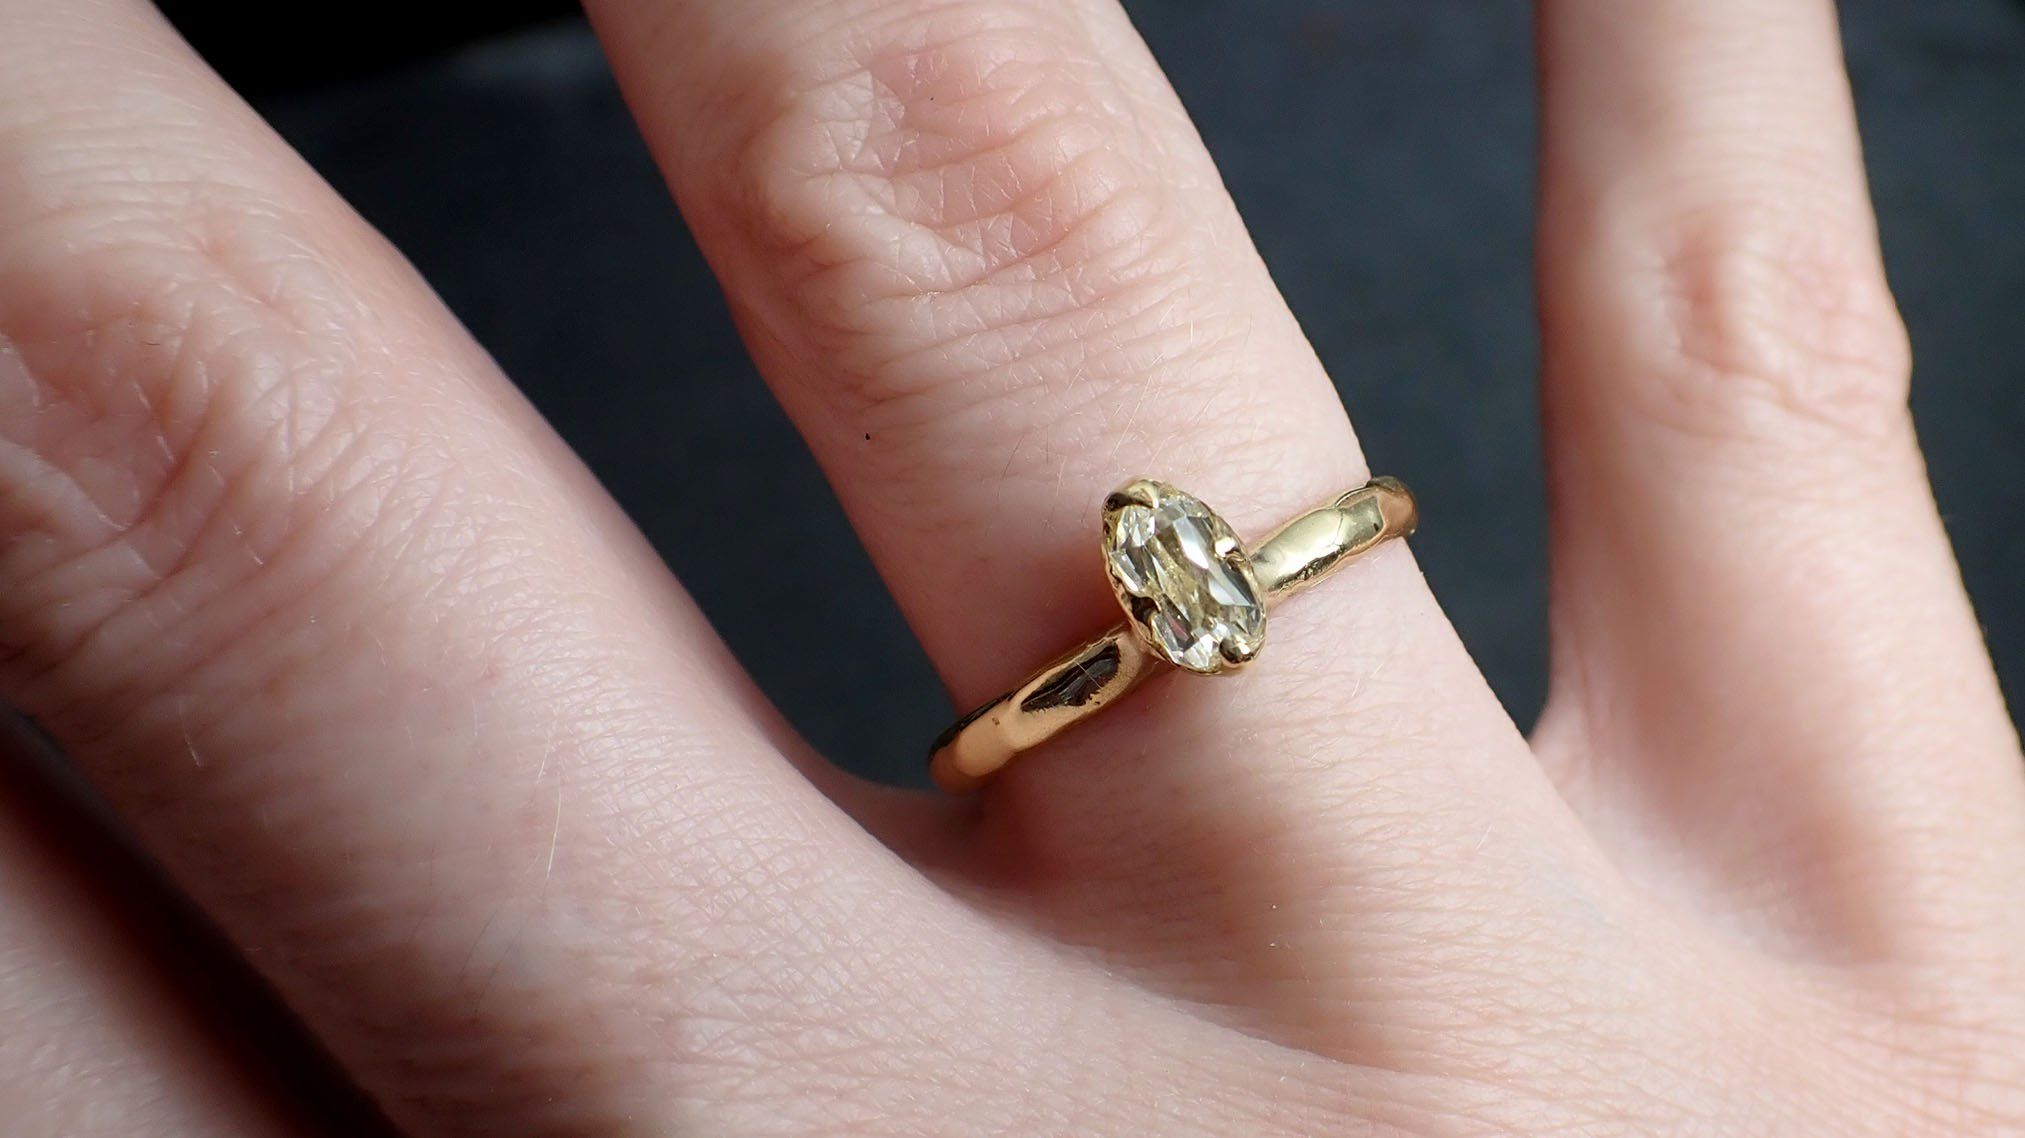 fancy cut white diamond solitaire engagement 18k yellow gold wedding ring diamond ring byangeline 2164 Alternative Engagement